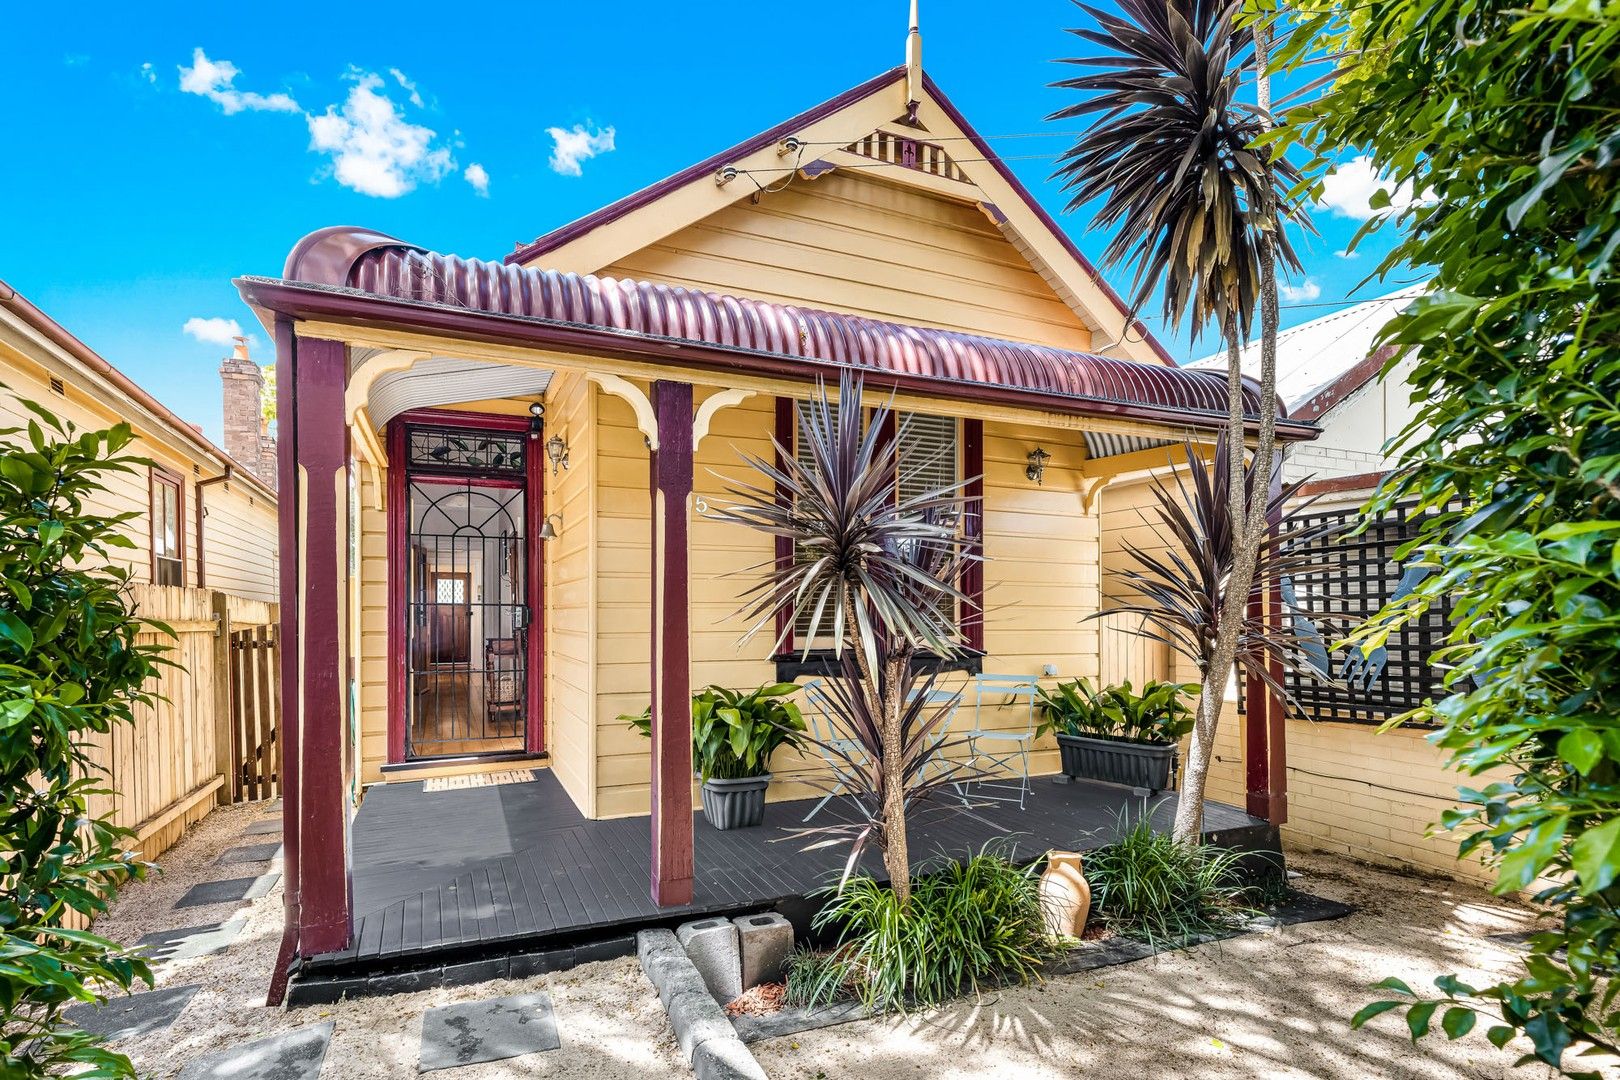 2 bedrooms House in 105 Good Street GRANVILLE NSW, 2142